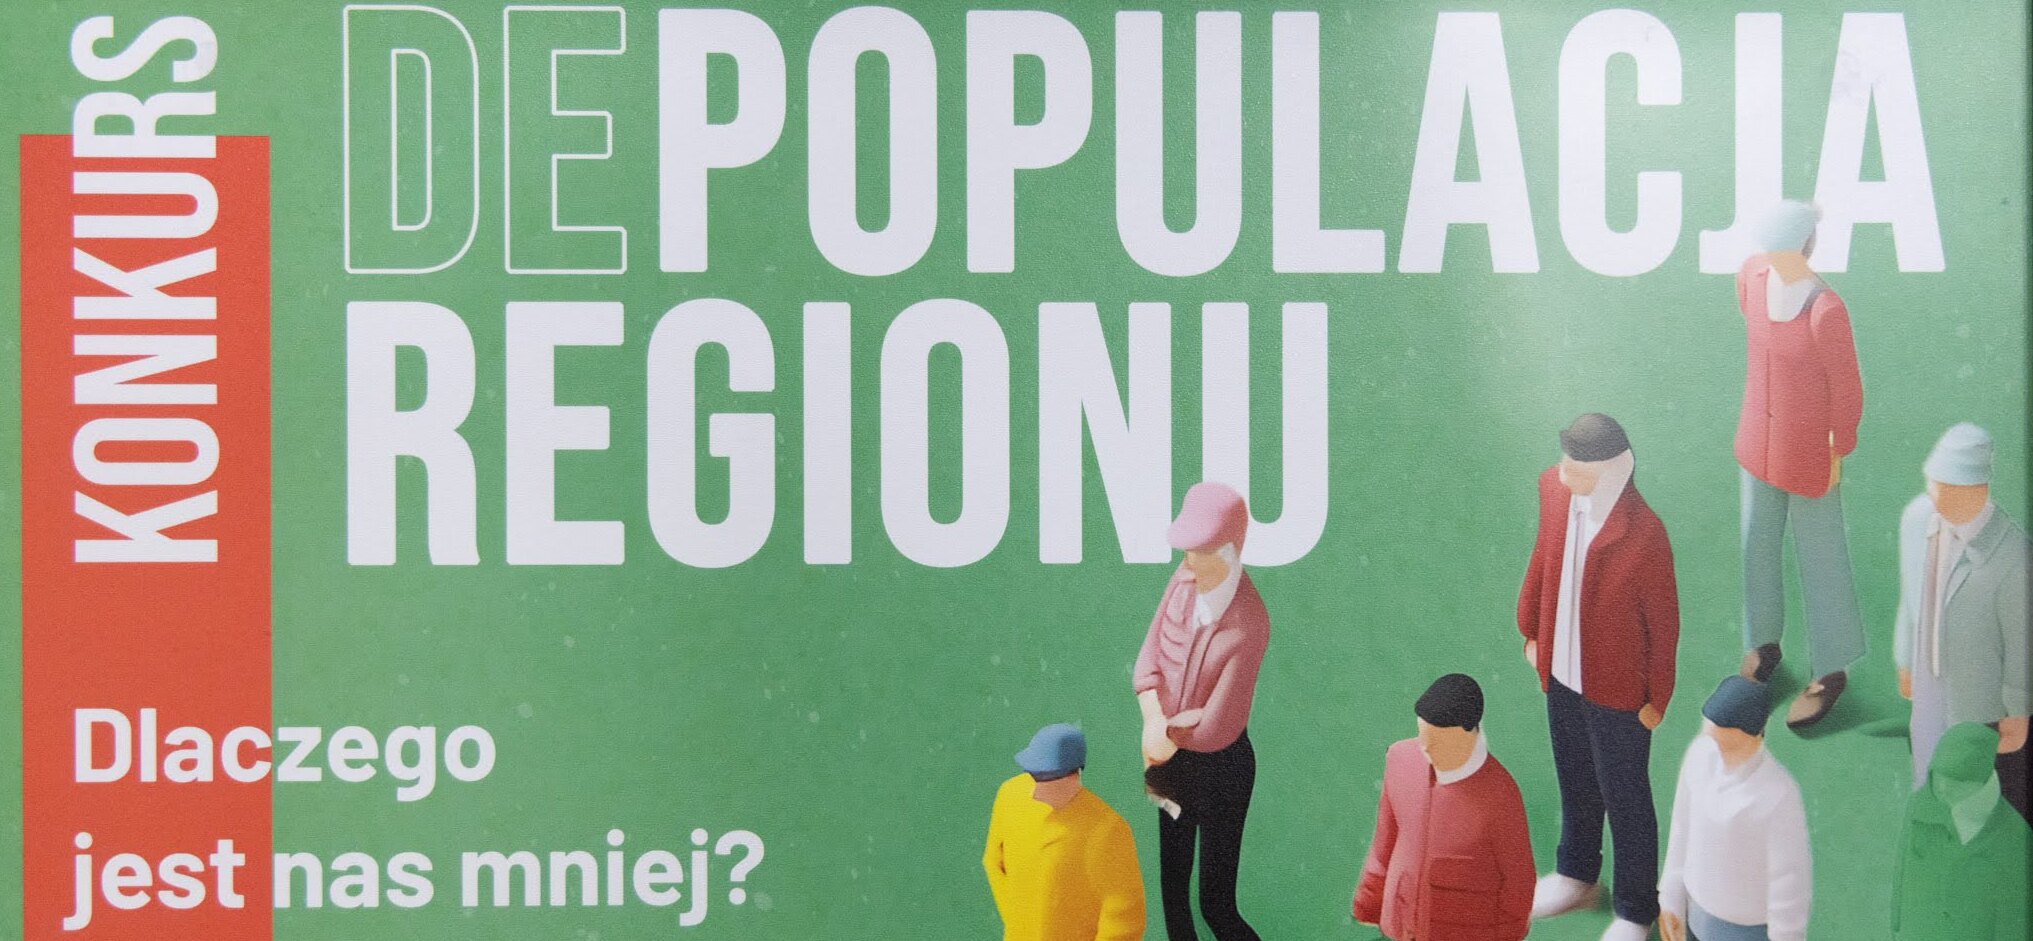 Konkurs Depopulacja regionu